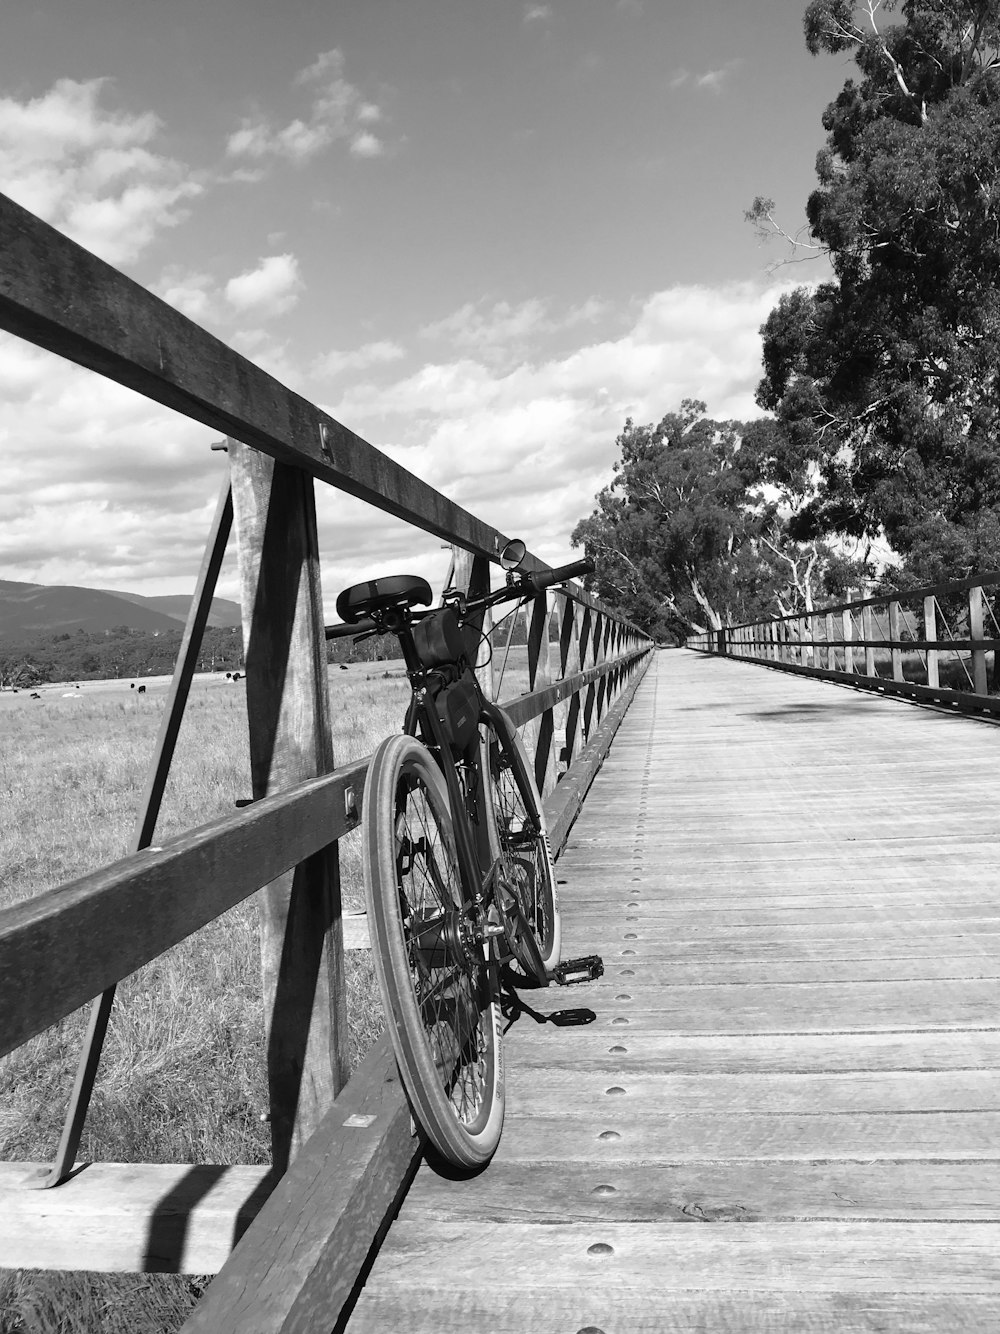 grayscale photo of bicycle on wooden bridge